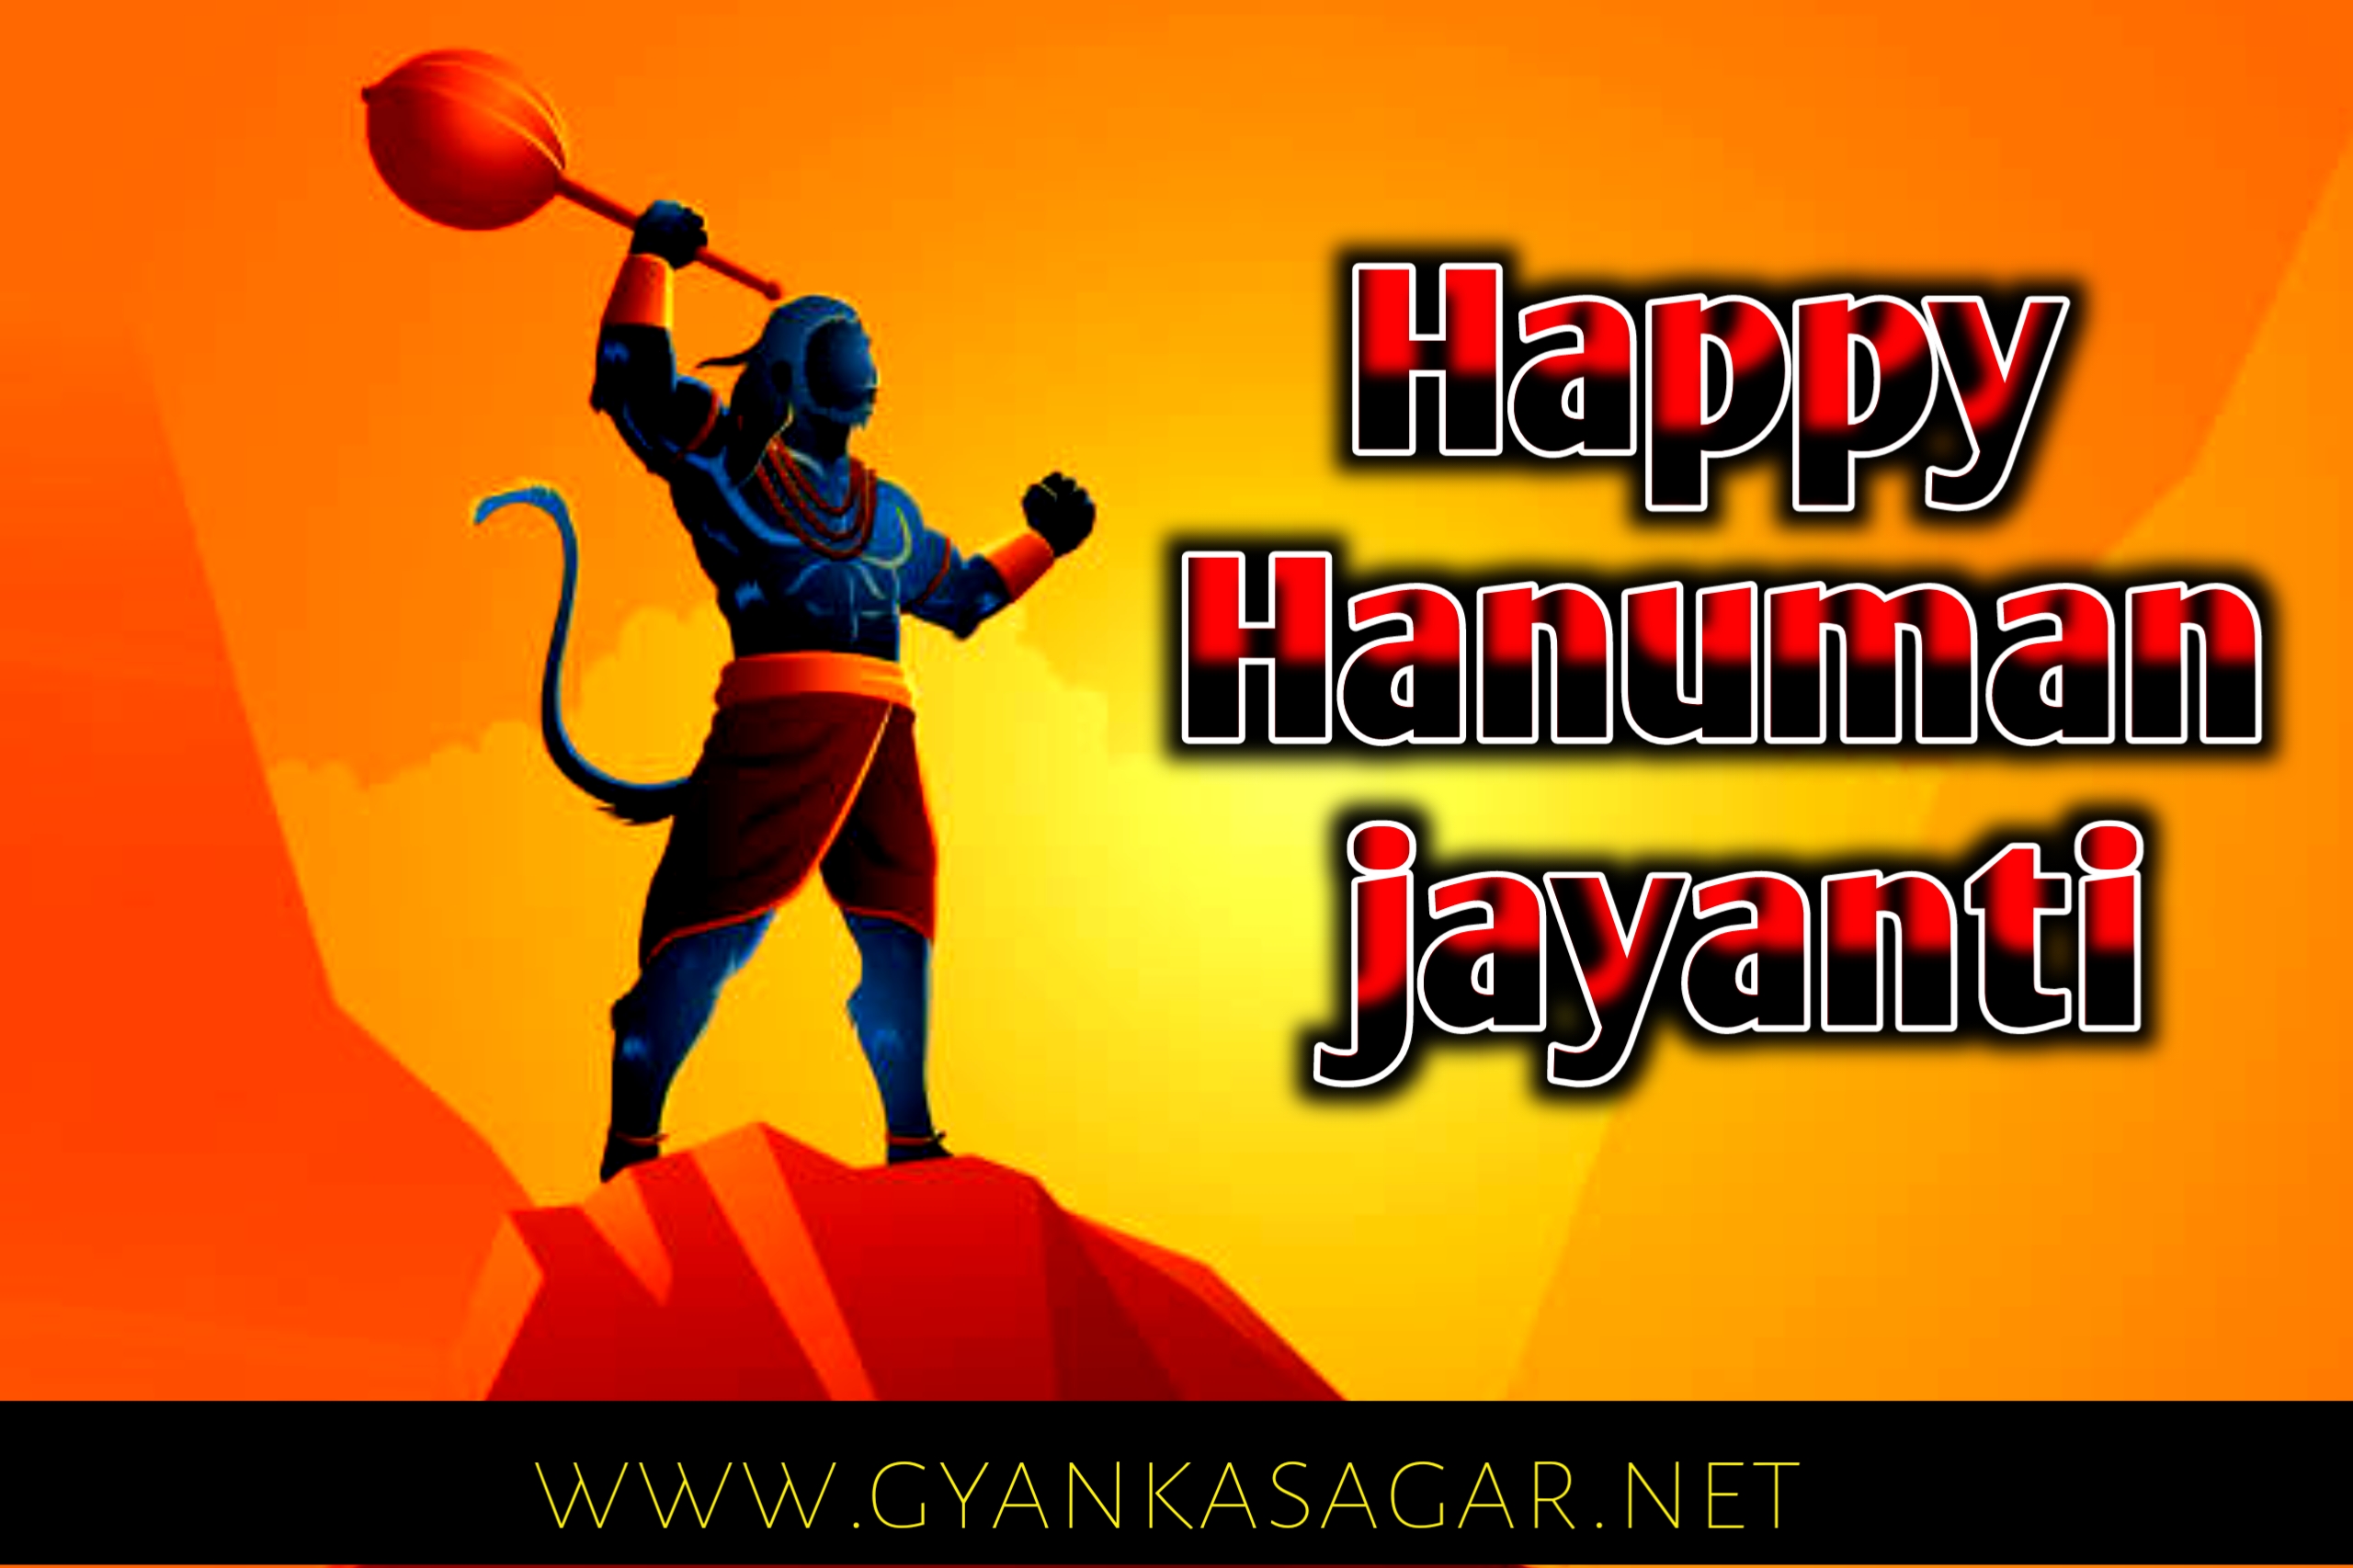 (#51+) Happy Hanuman jayanti quote in Hindi 2023 | हनुमान जयंती पर शायरी 2023,Happy Hanuman jayanti quote in Hindi 2023,Happy Hanuman jayanti status in Hindi 2023, Hanuman jayanti shayari in Hindi 2023-2024, Hanuman jayanti quote wishes in Hindi 2023, happy Hanuman jayanti message in Hindi 